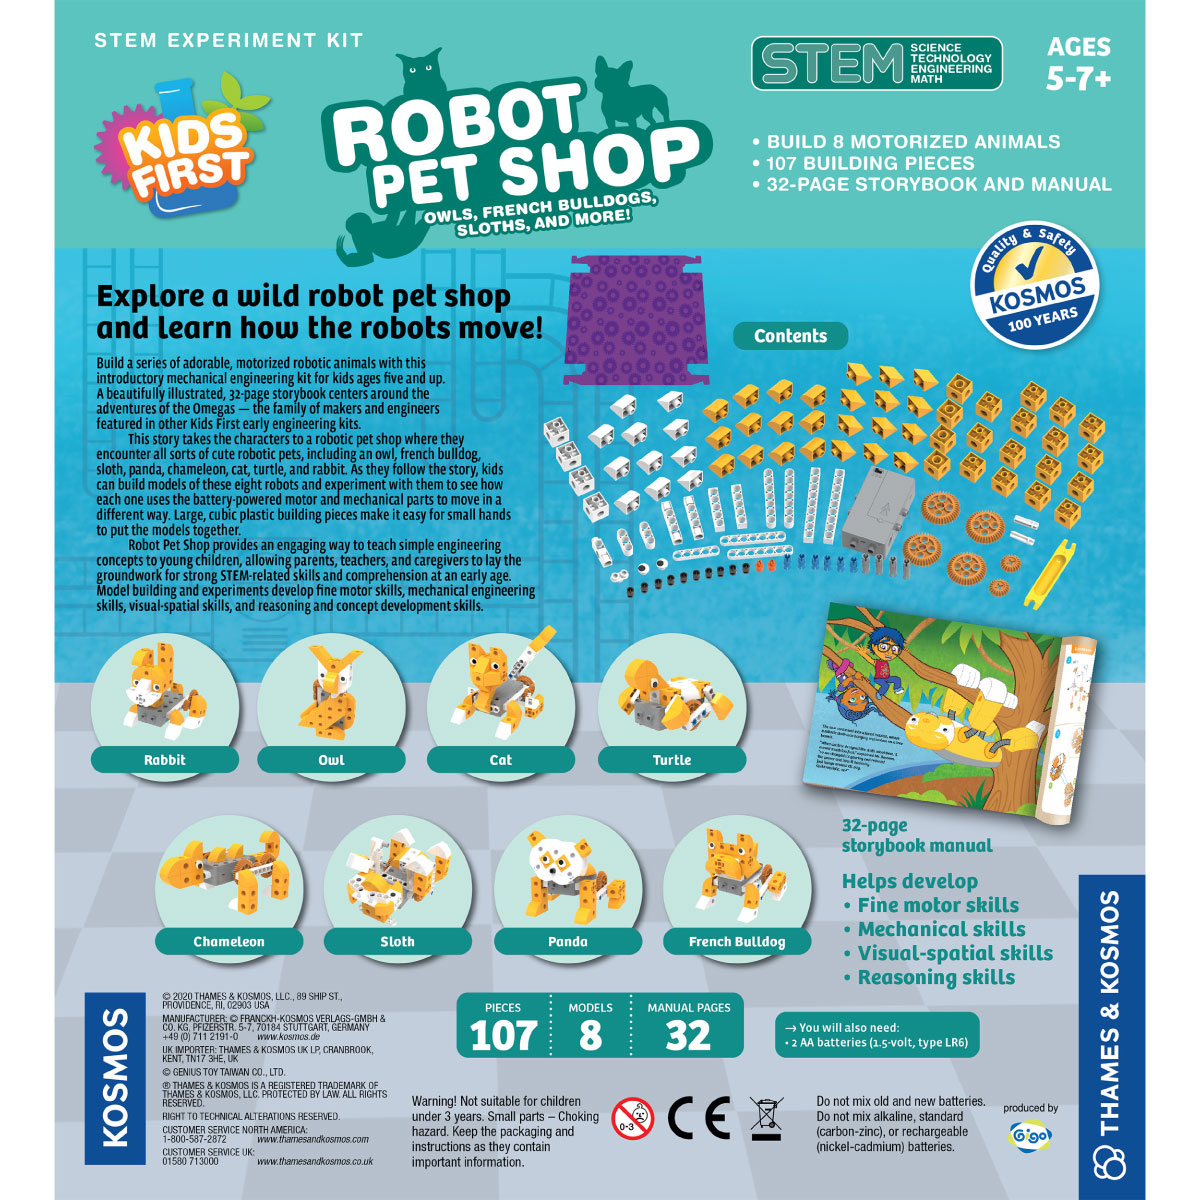 Kids First Robot Pet Shop from Thames & Kosmos